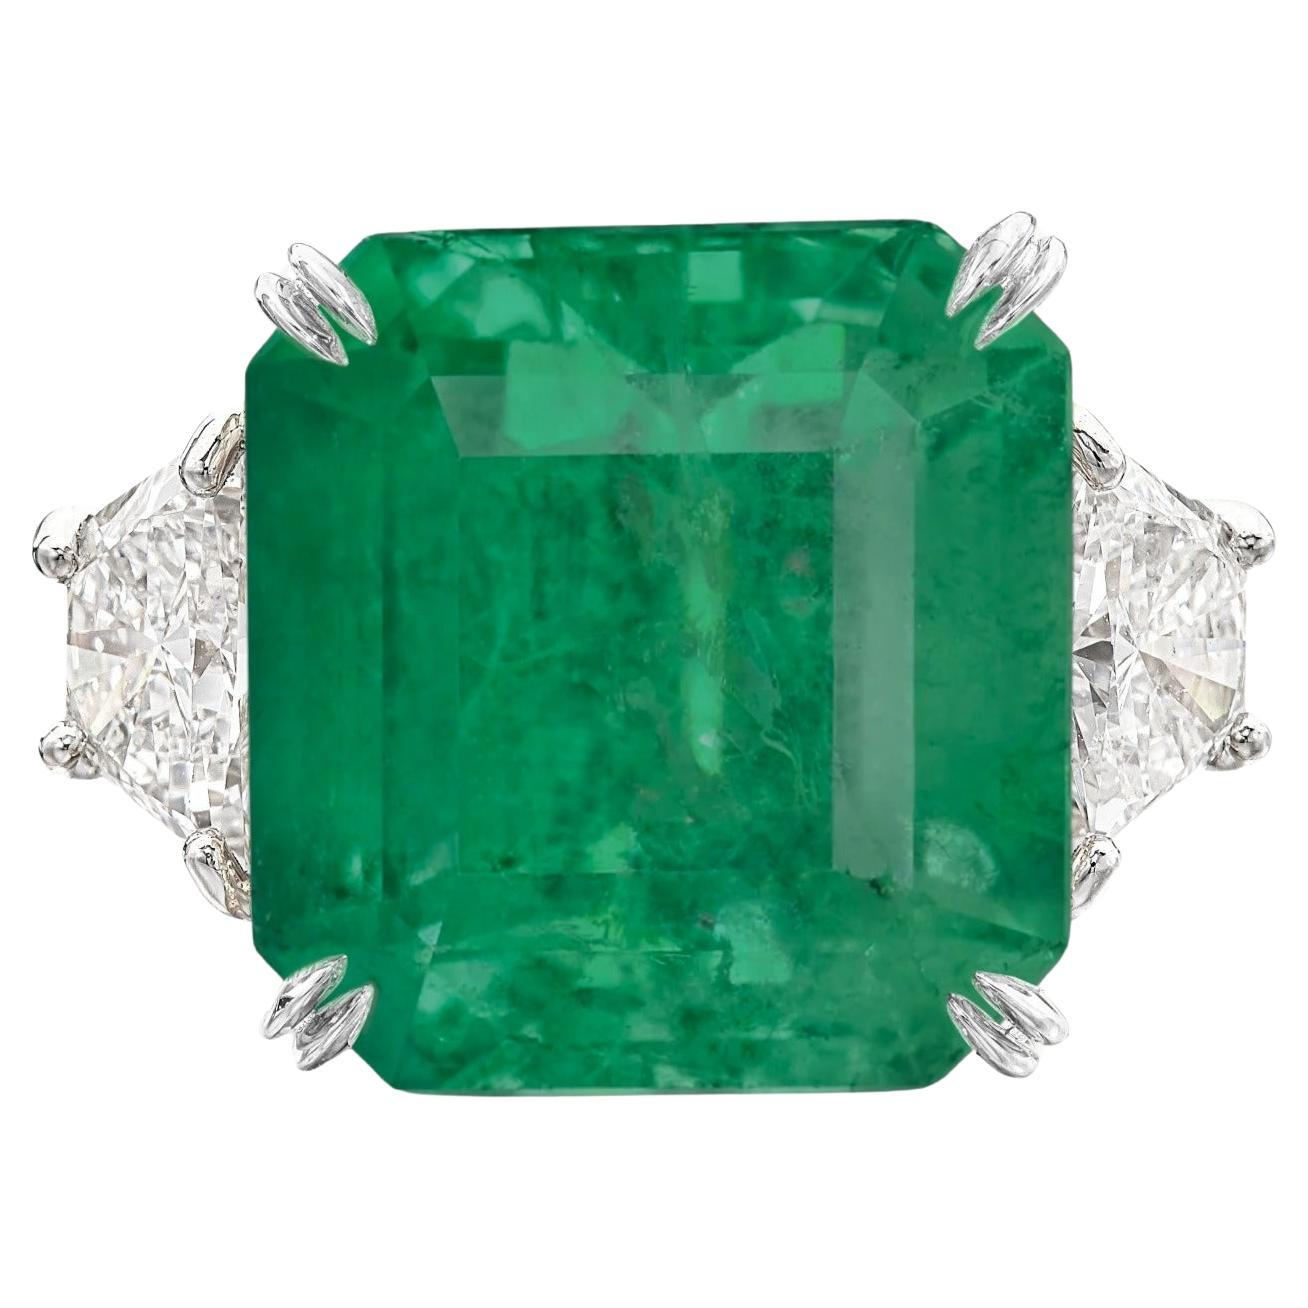 EXCEPTIONAL VIVID GREEN 6 Carat Colombian Emerald Diamond Ring